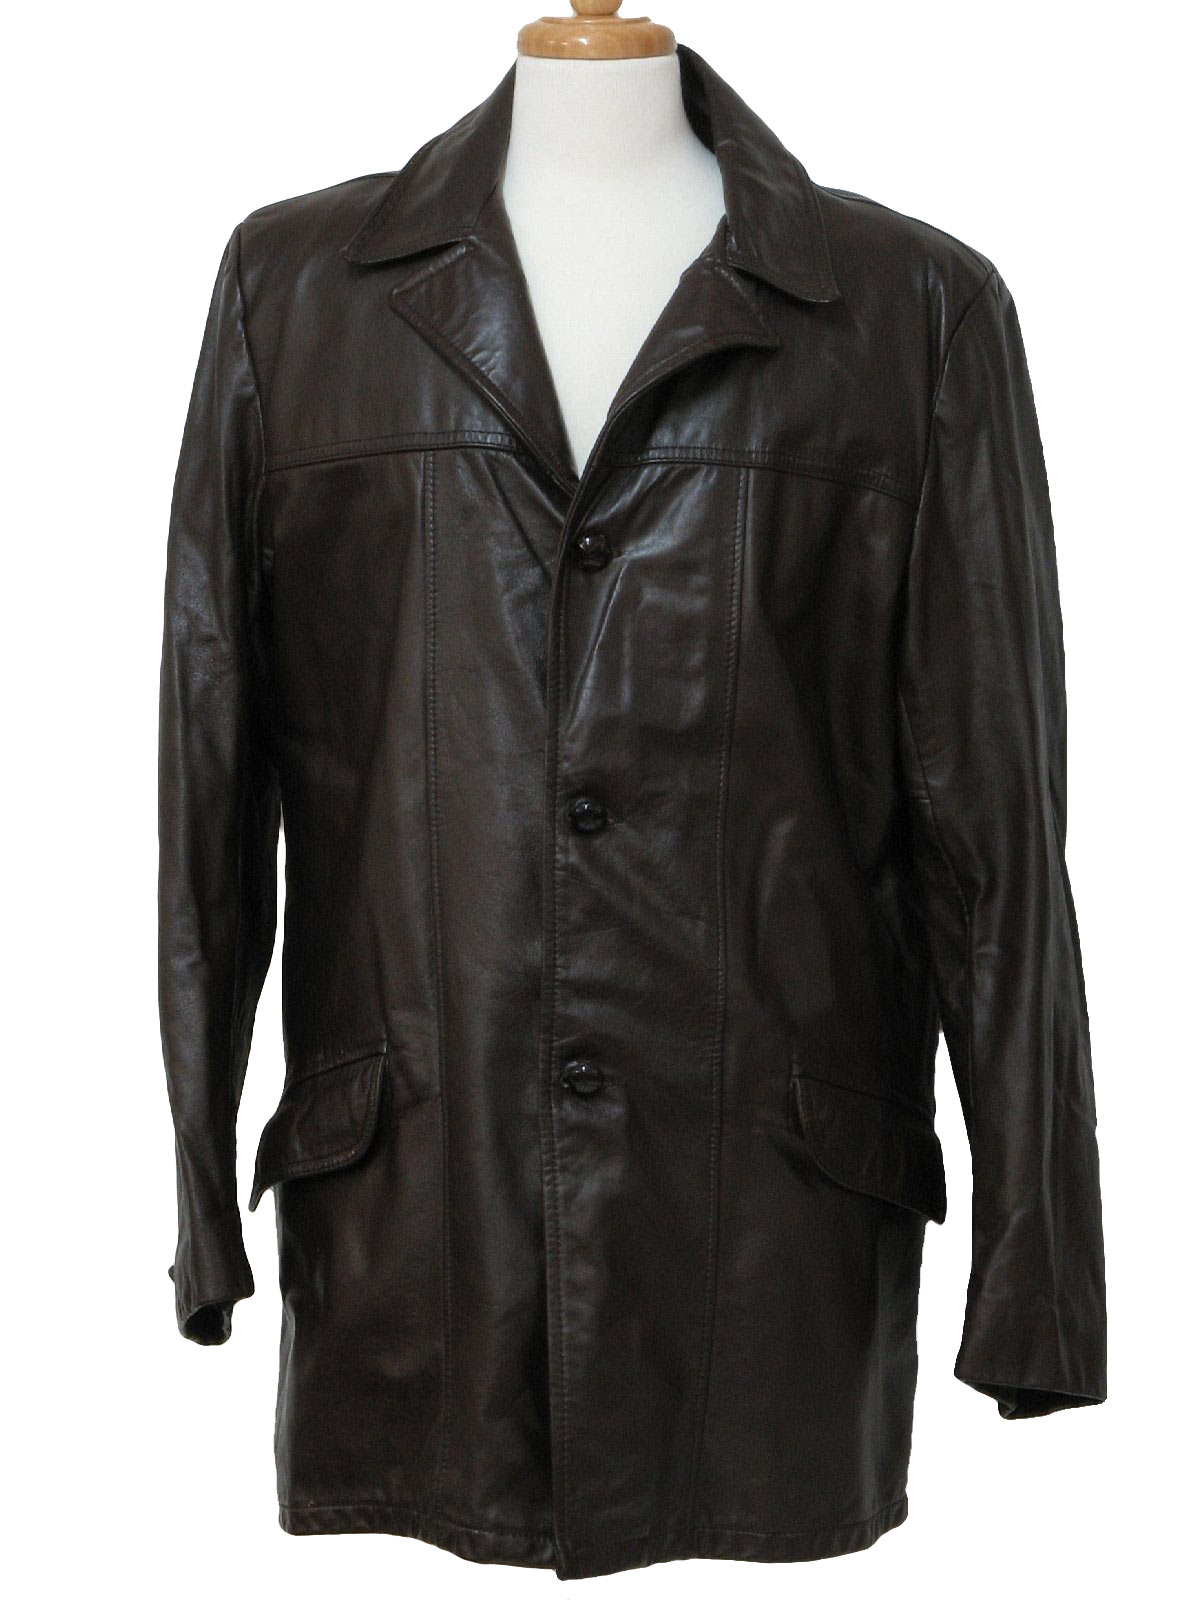 Retro 70s Leather Jacket (Genuine Leather) : 70s -Genuine Leather